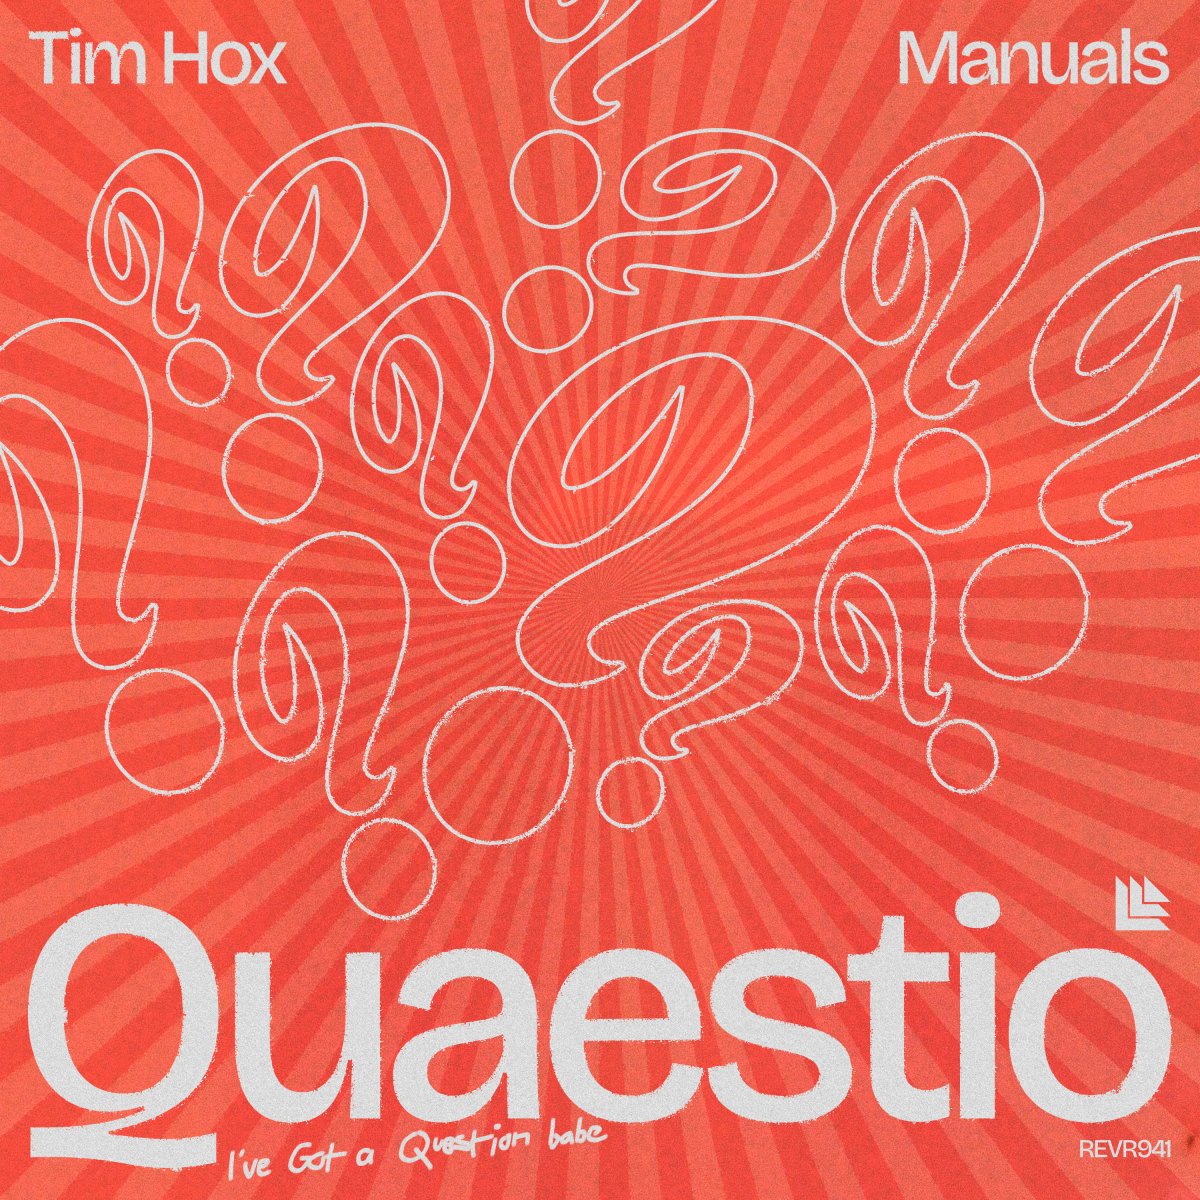 Quaestio (i've got a question babe) - Tim Hox⁠ & Manuals⁠ 